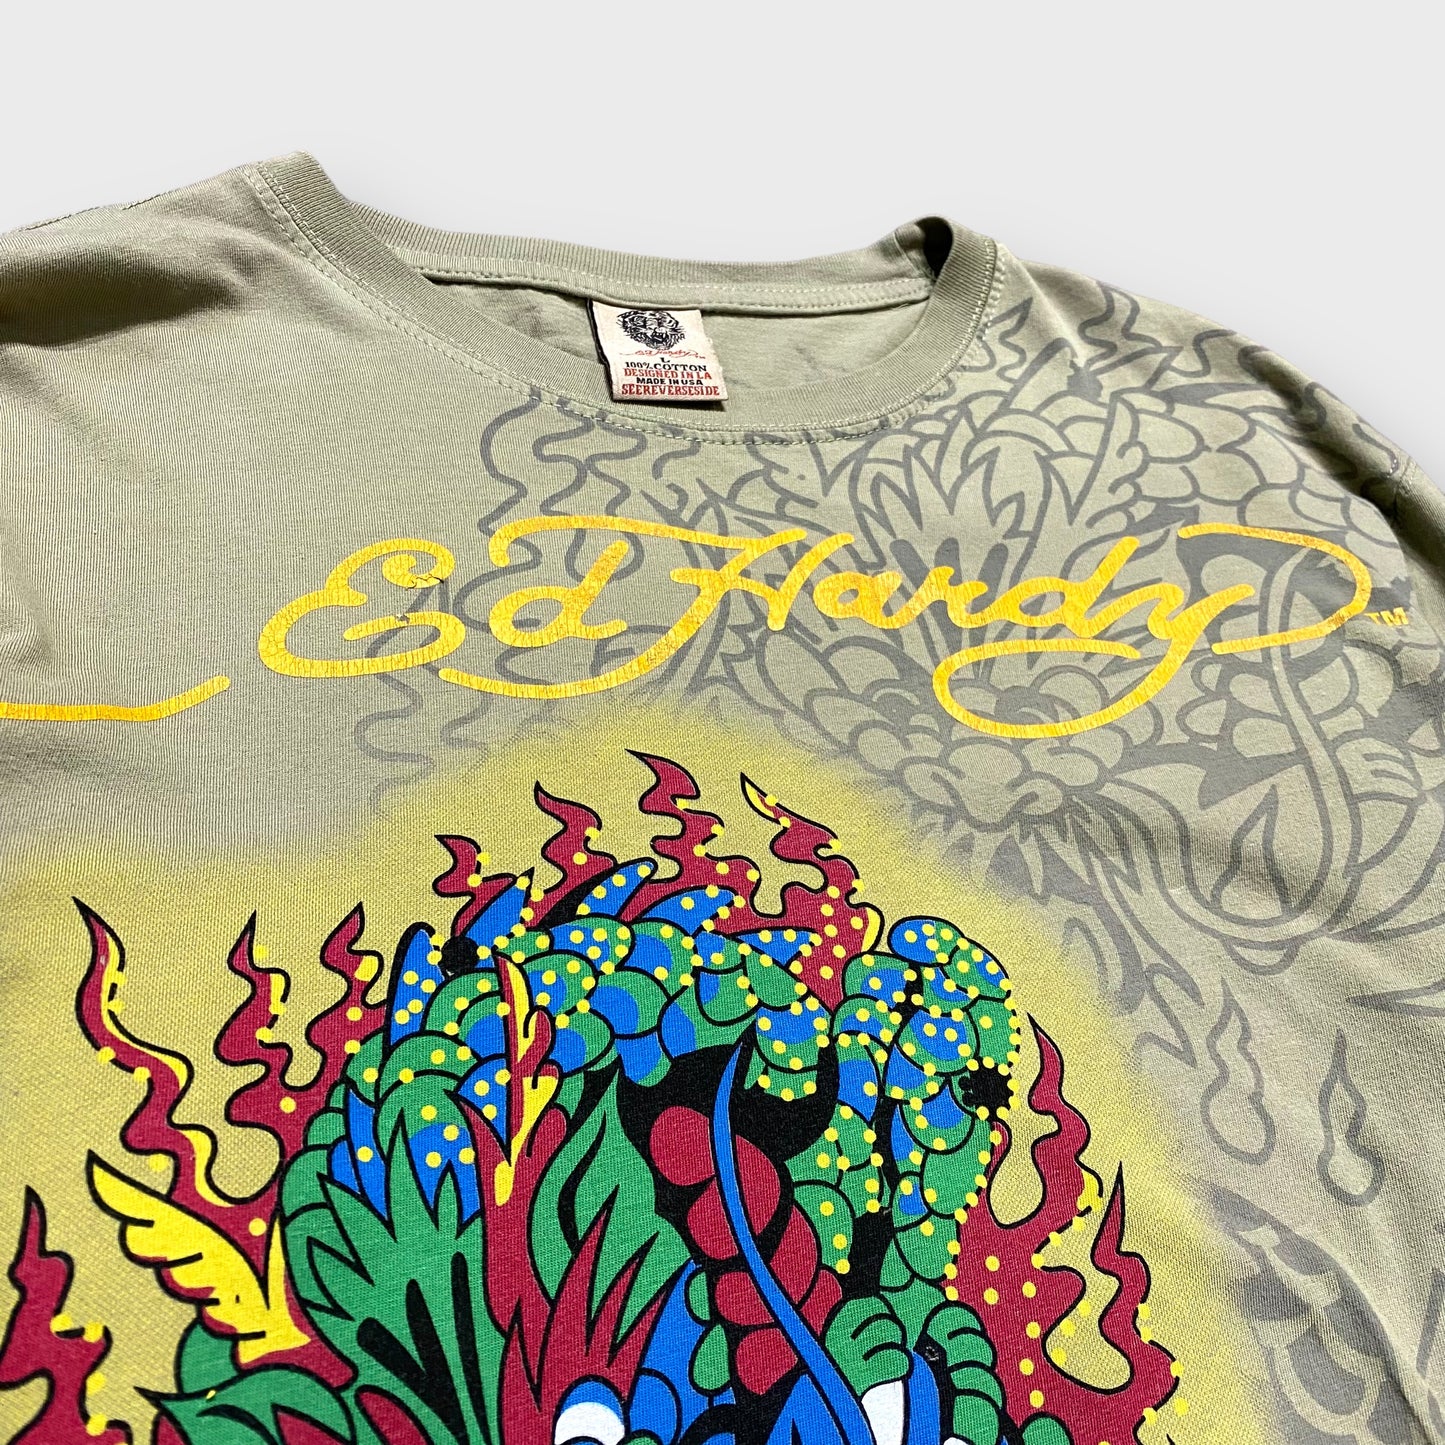 "Ed Hardy" Dragon design l/s t-shirt